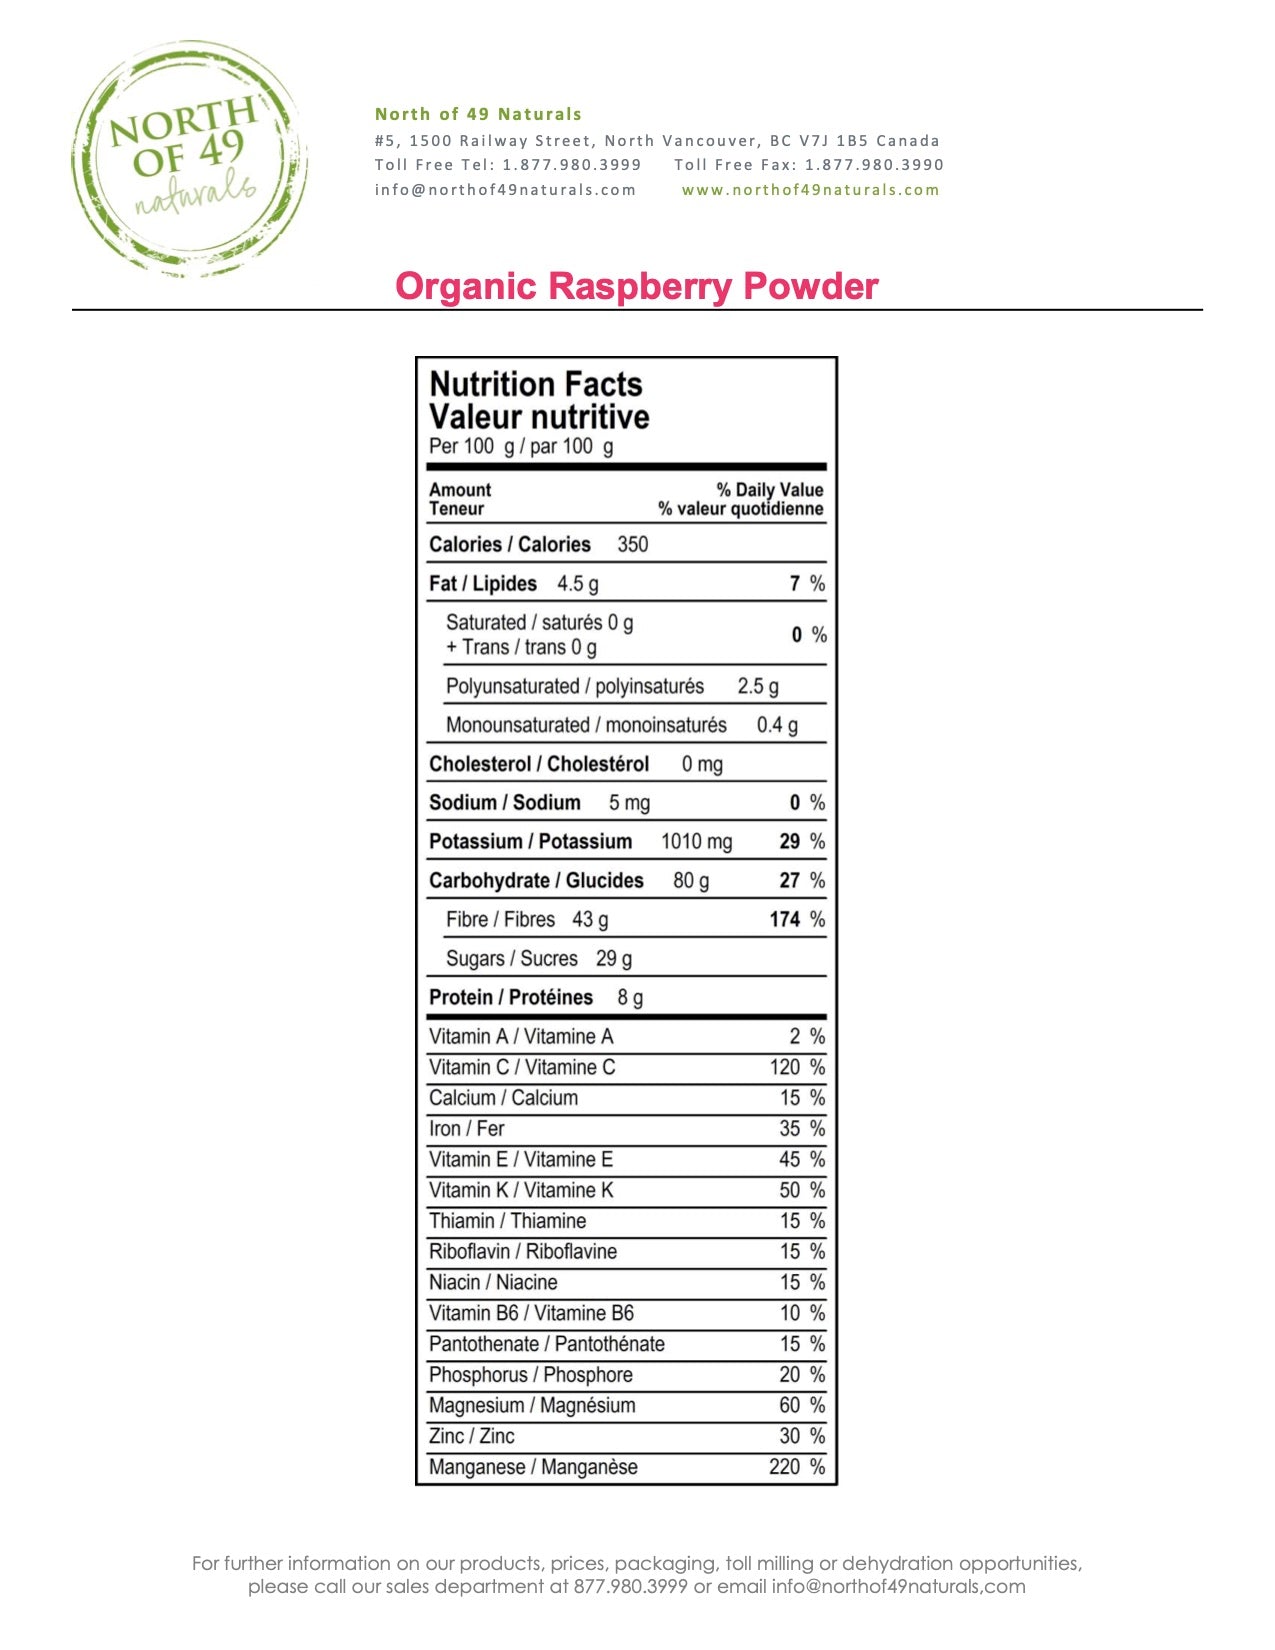 Organic Raspberry Powder Nutritional Facts